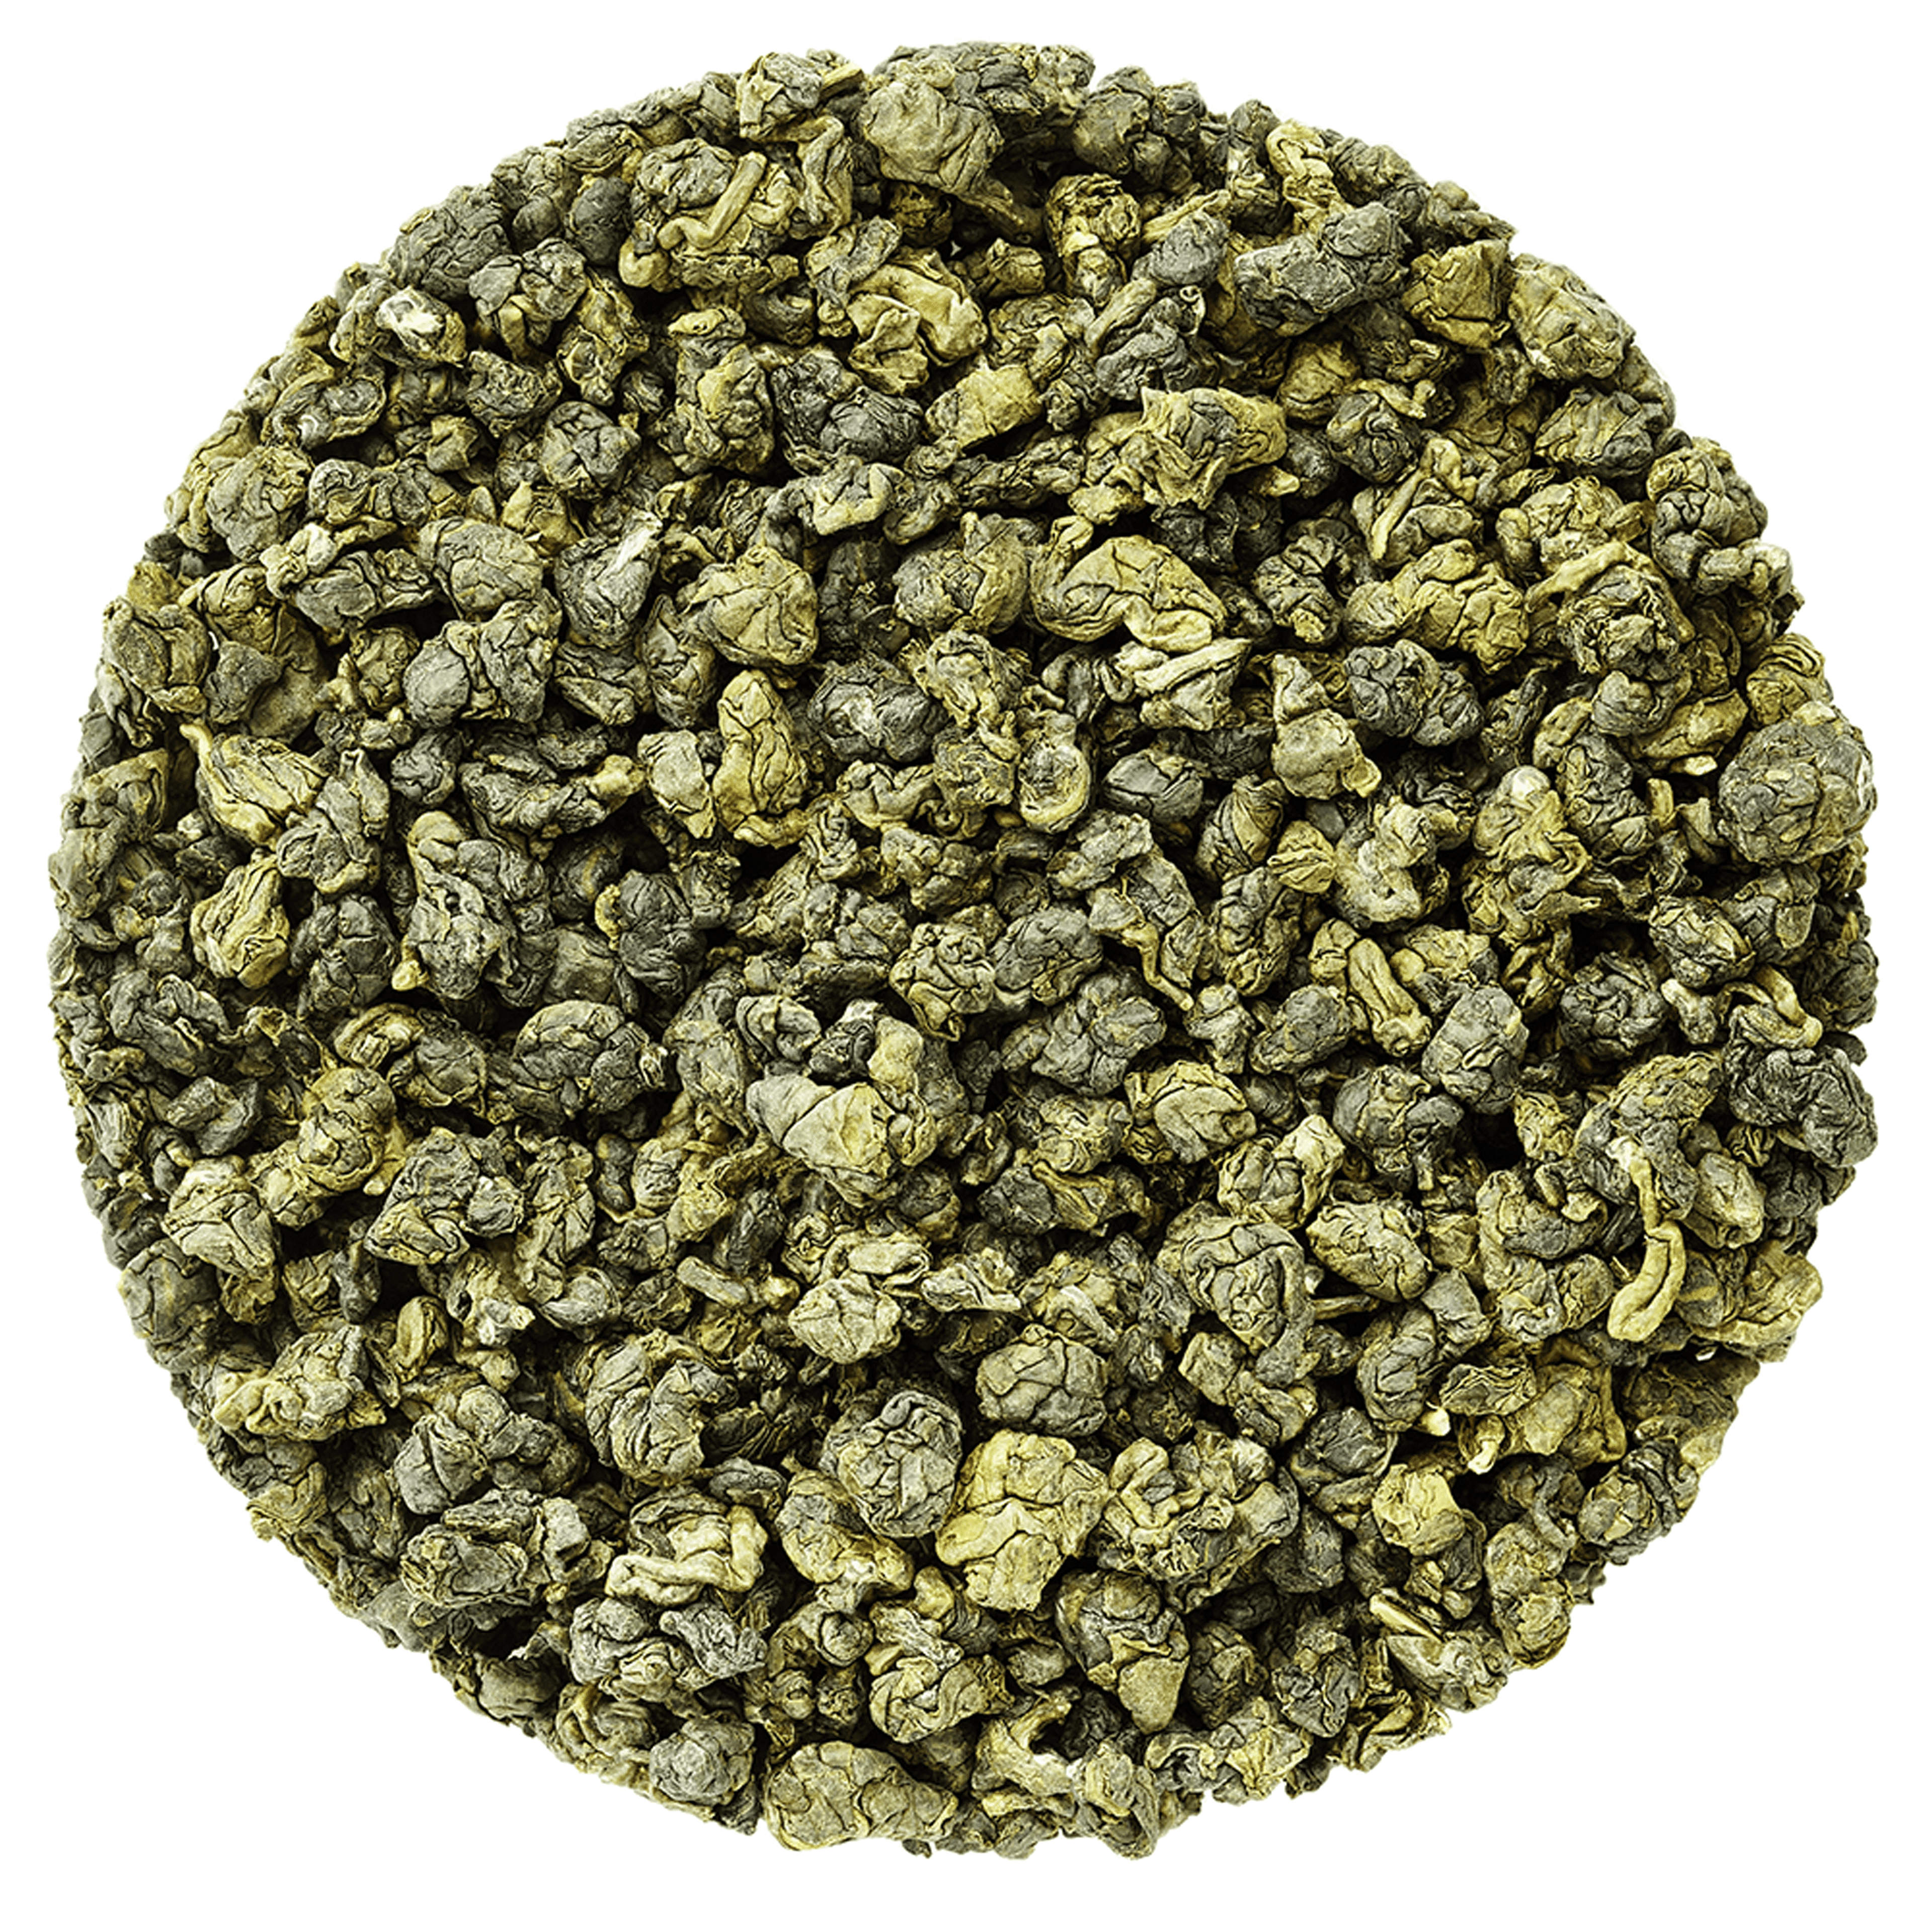 Composition of Soo Long tea